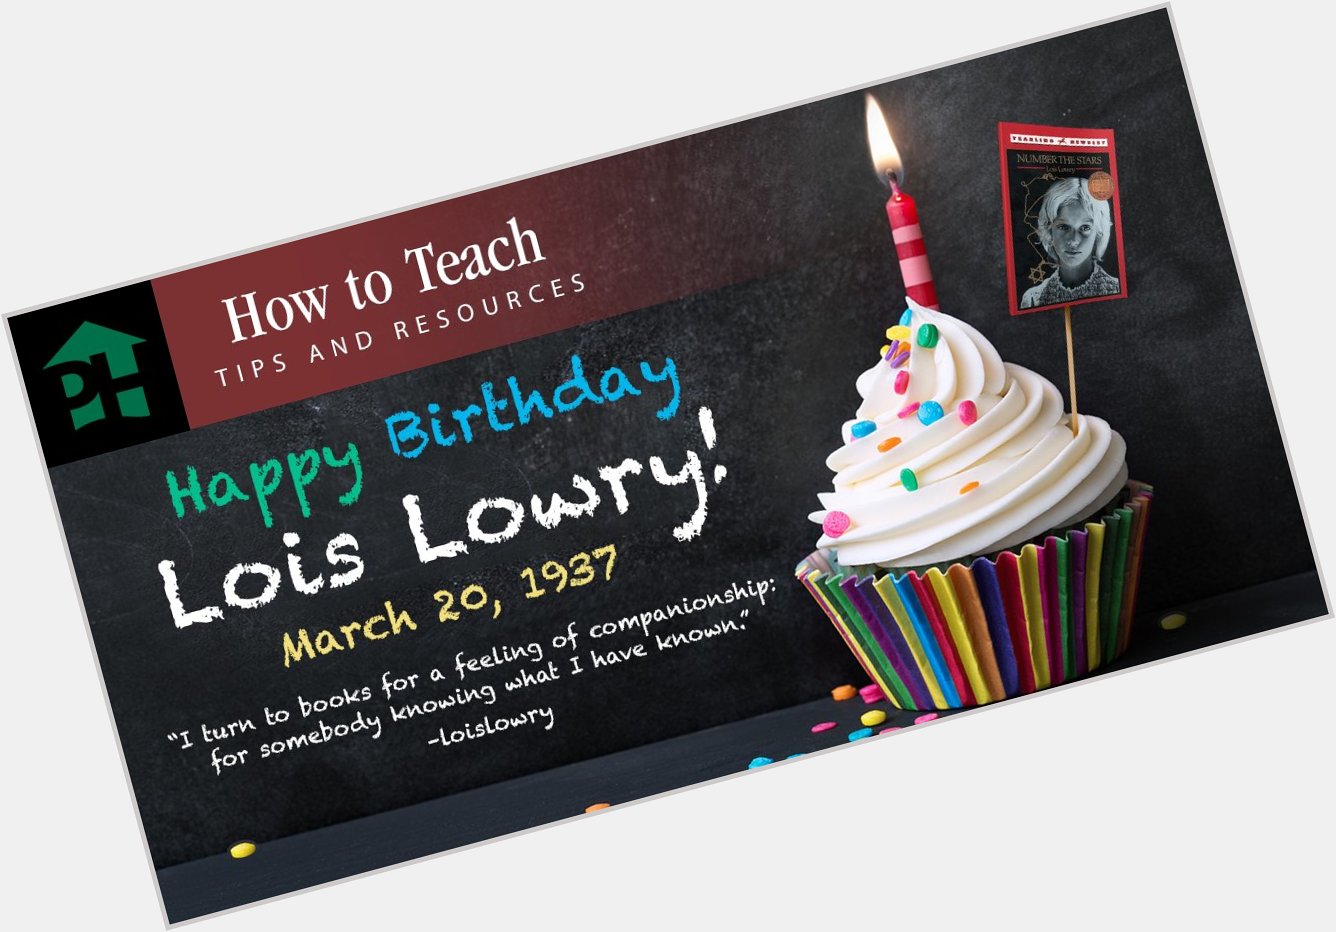 Happy birthday to Lois Lowry!  